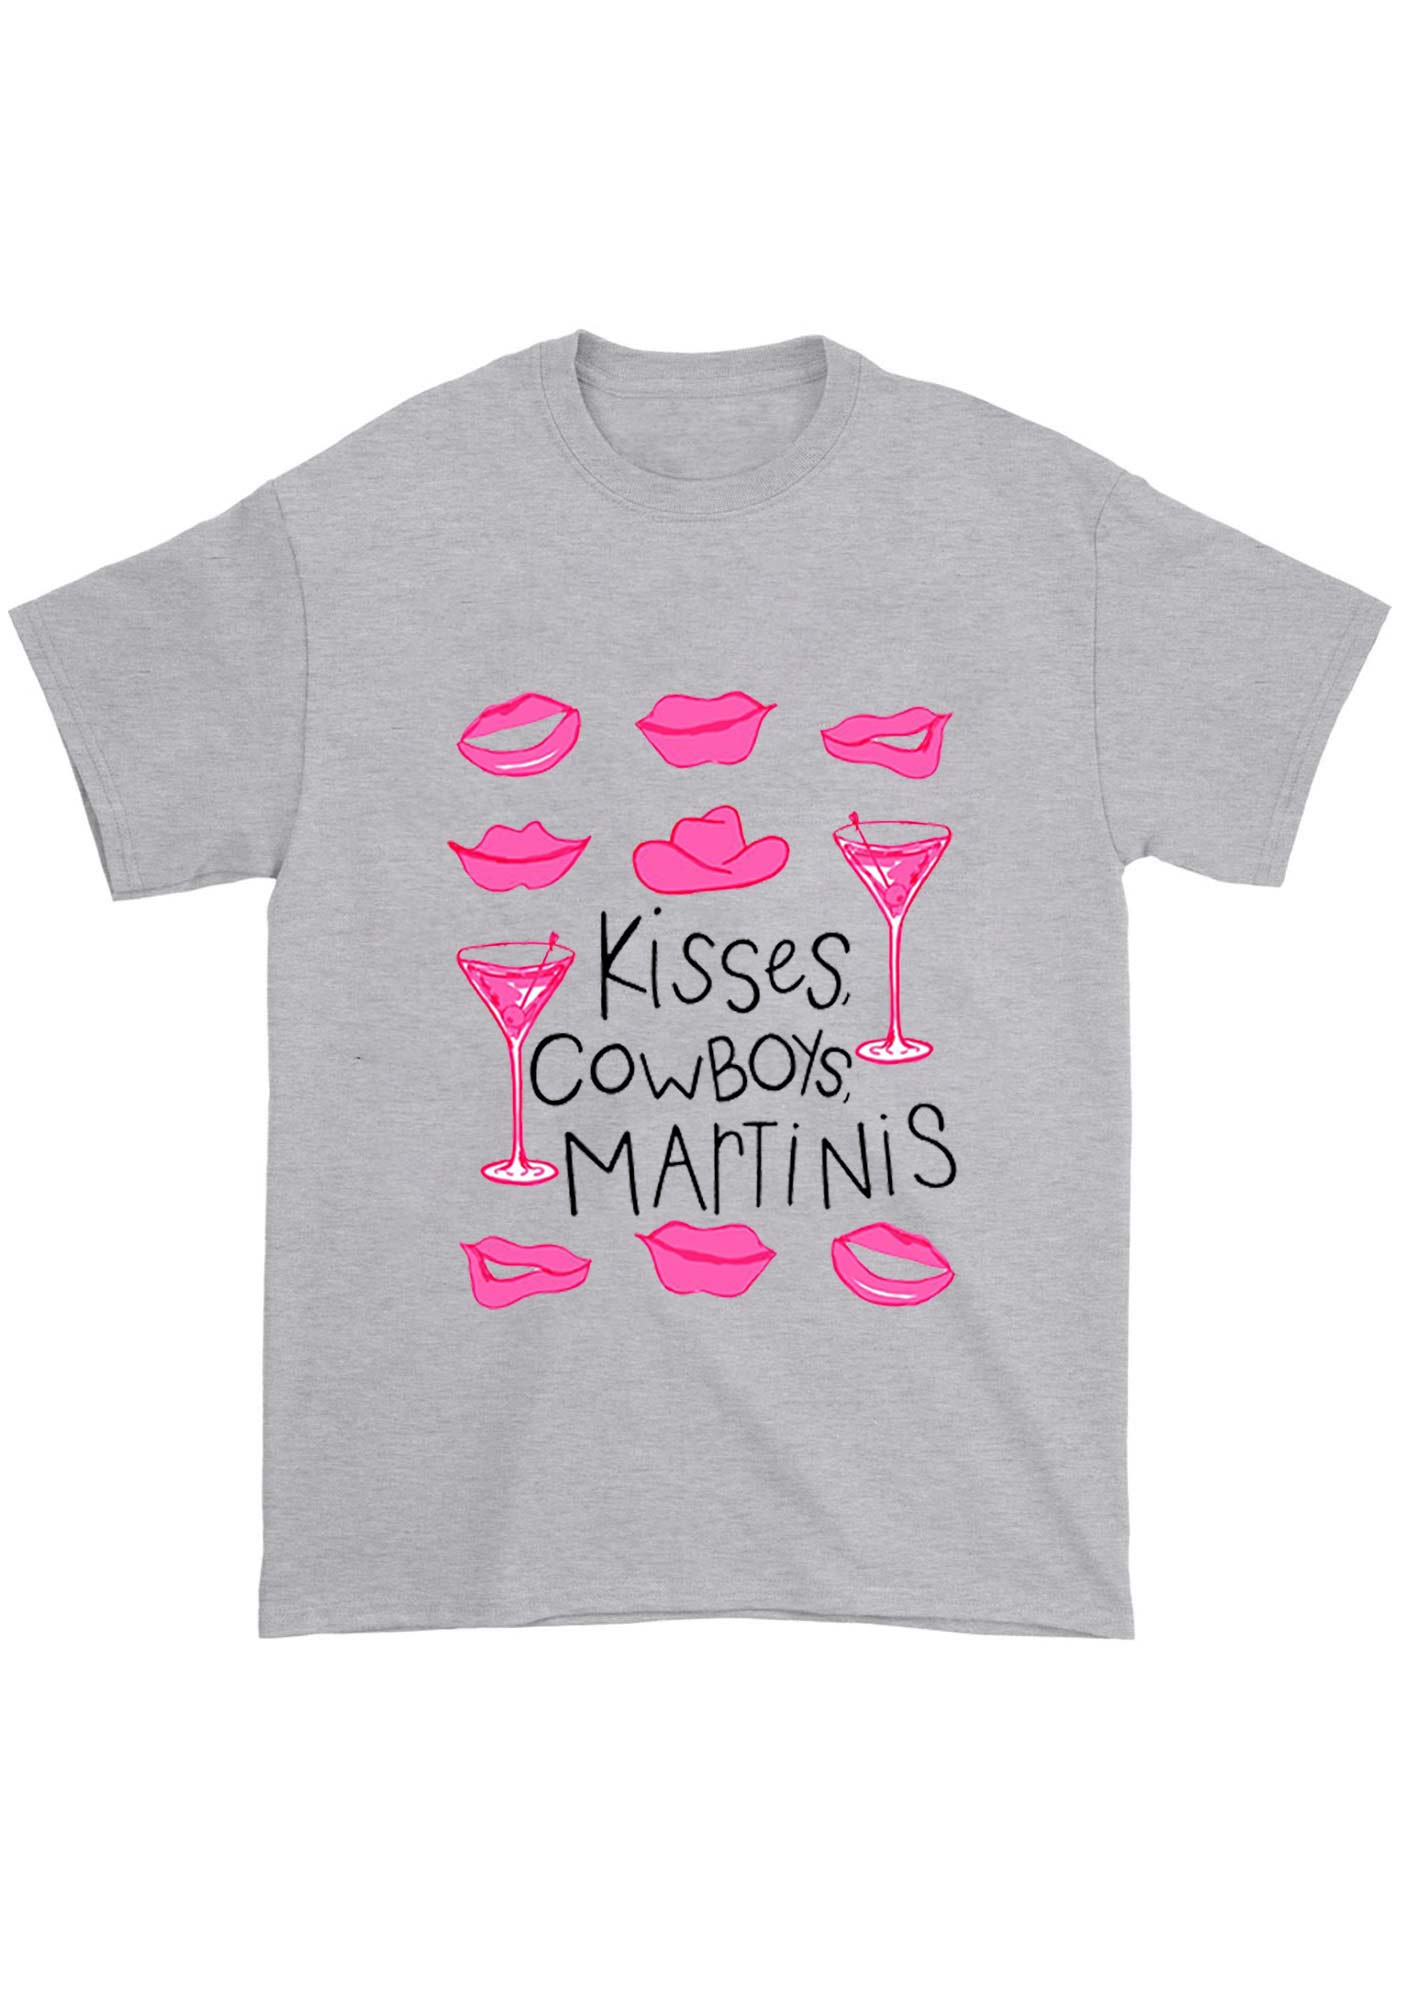 Kisses Cowboys Martinis Chunky Shirt